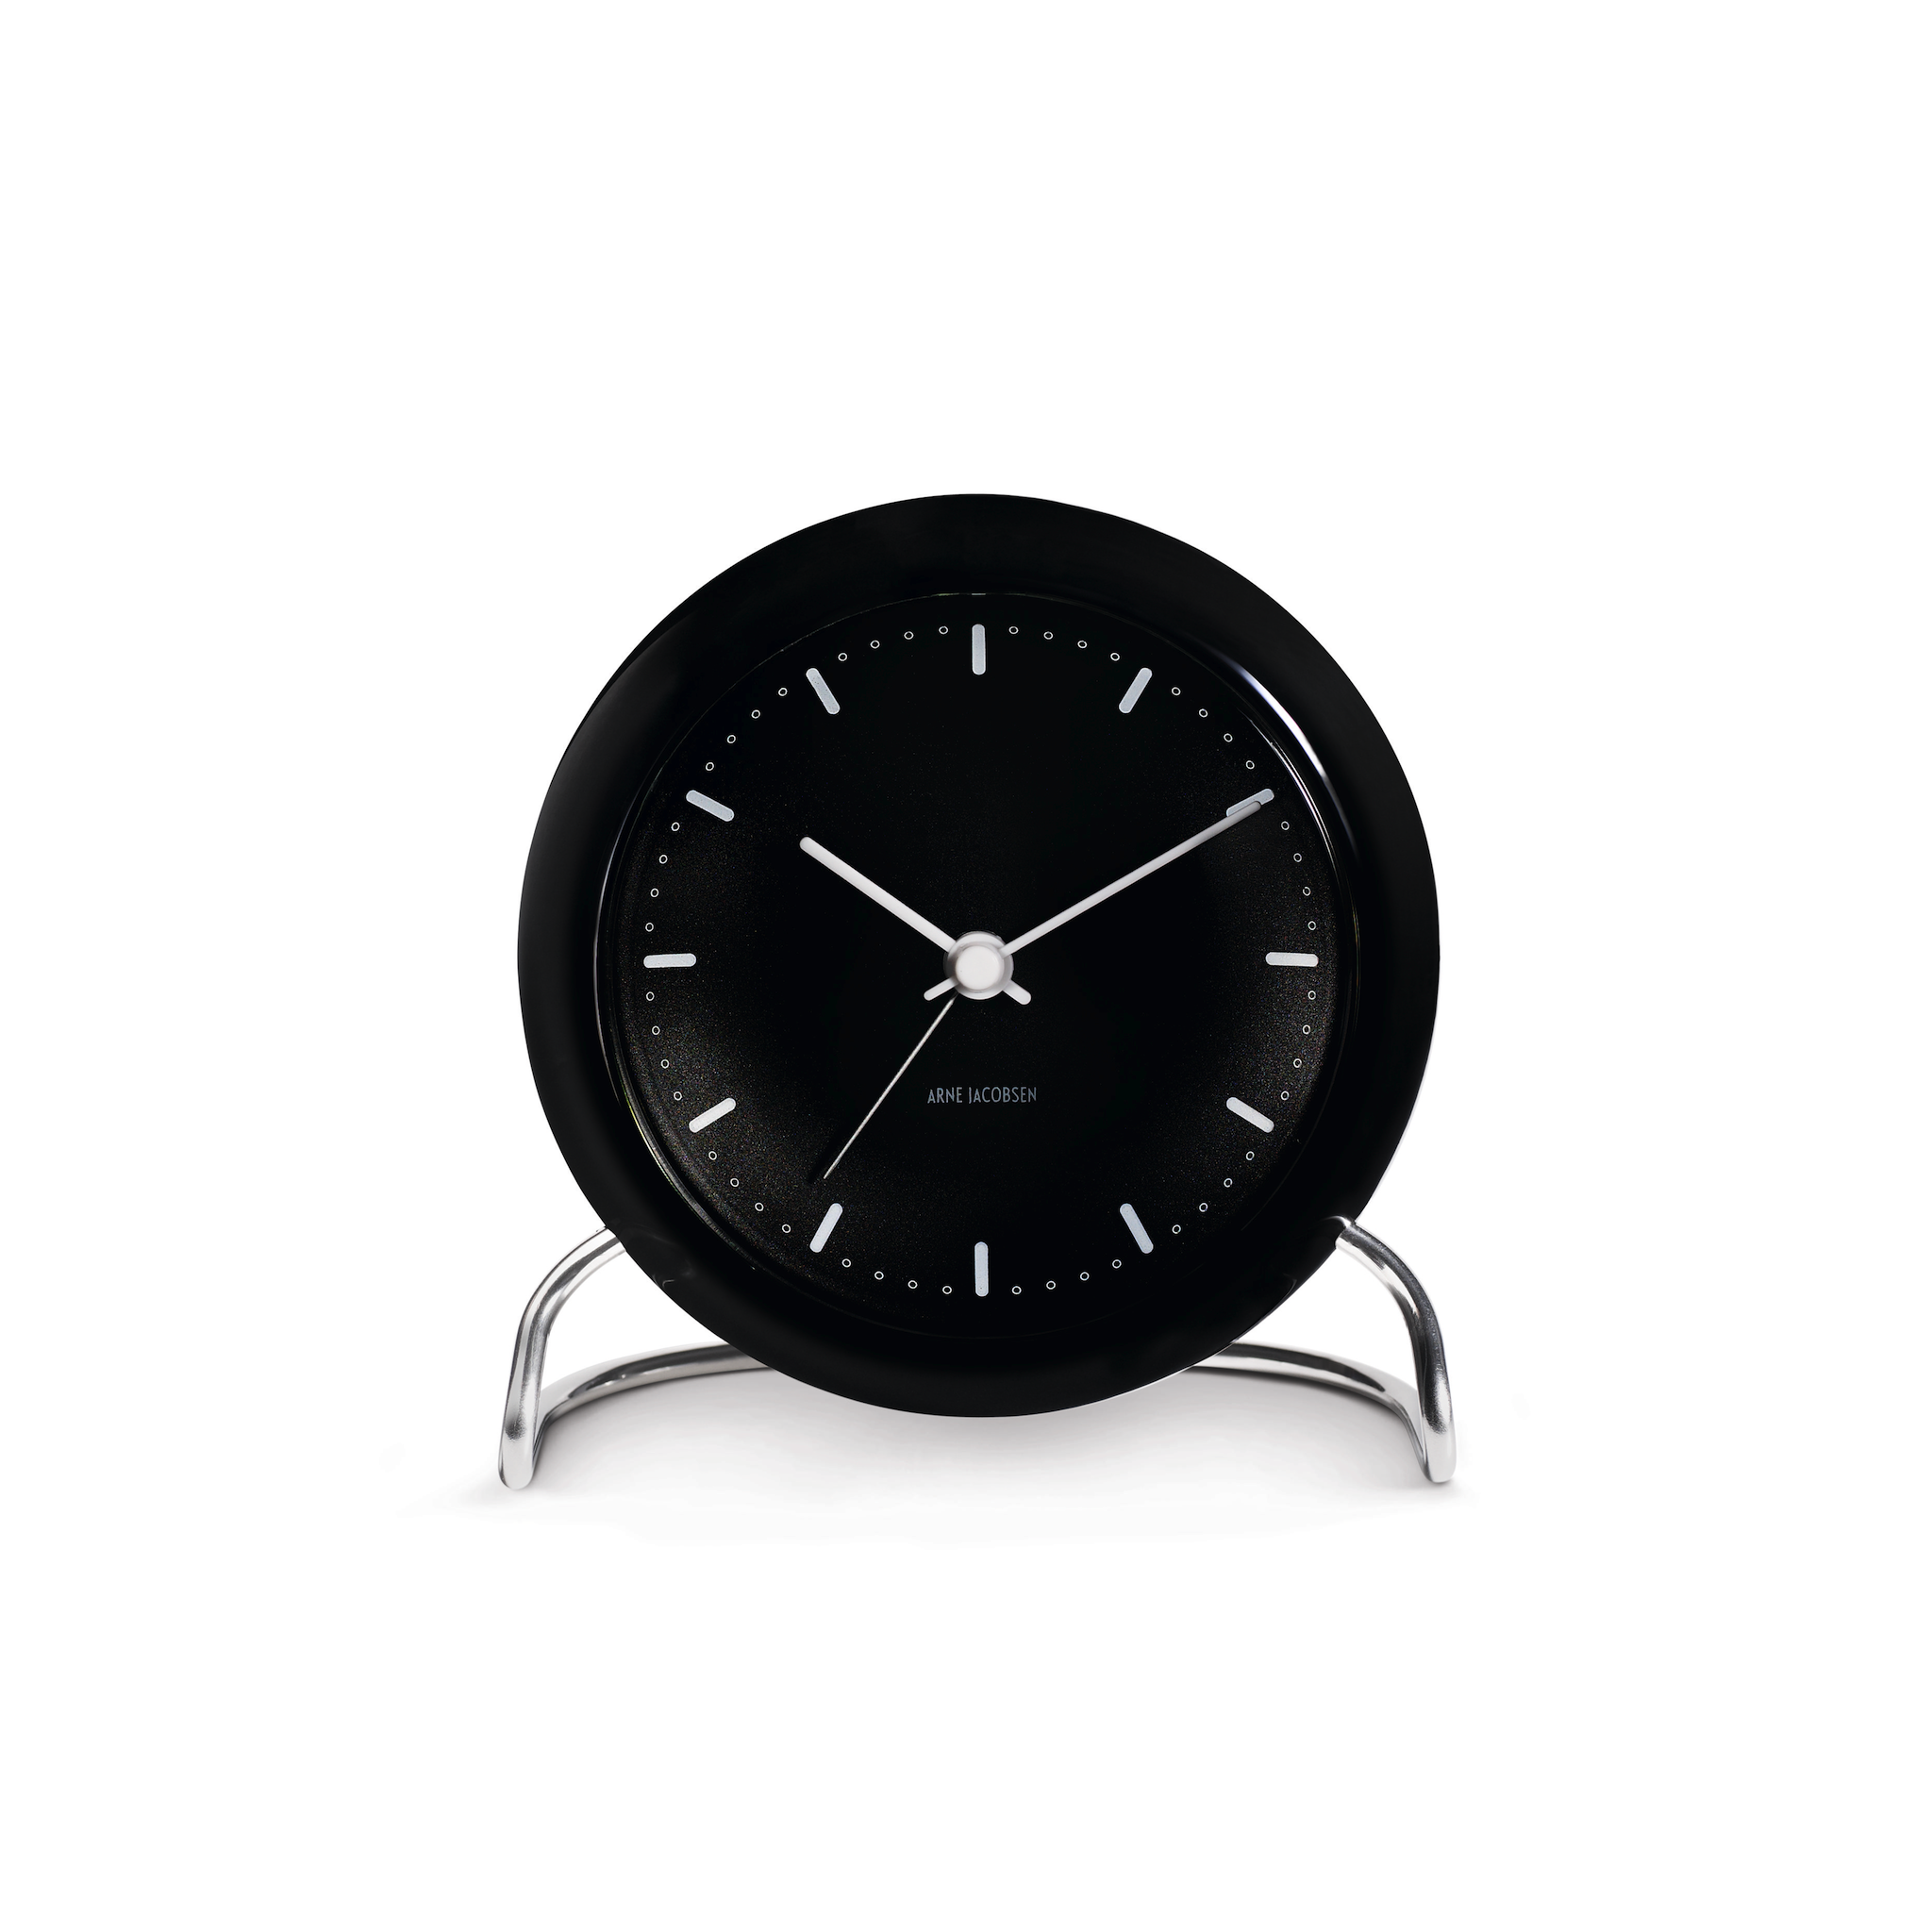 Arne Jacobsen City Hall Alarm Clock - Black